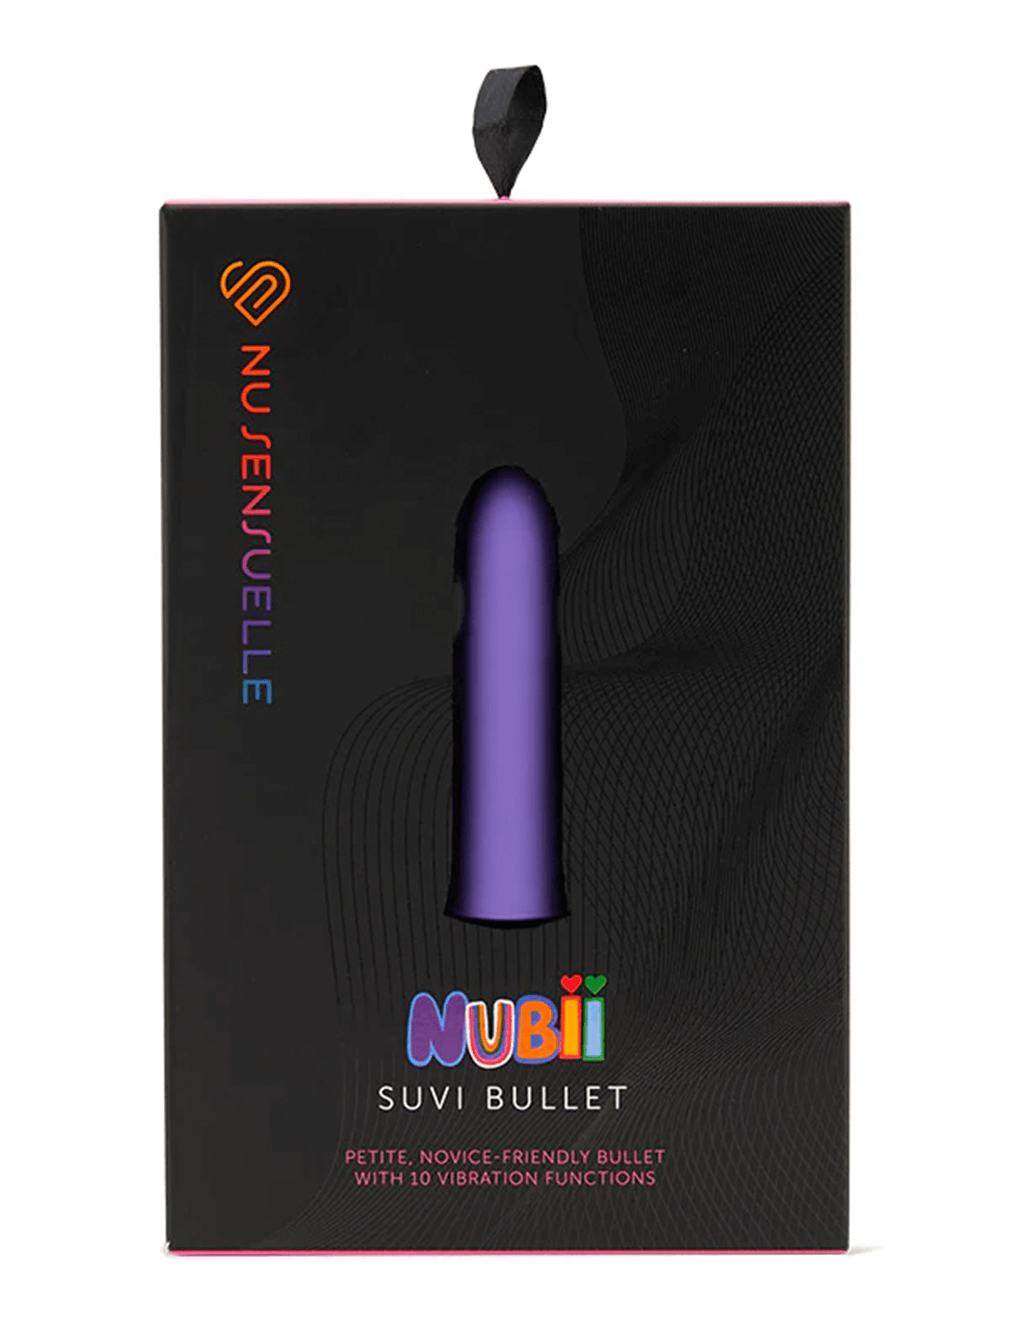 Nu Sensuelle Suvi Nubii Bullet - Ultra Violet - Box Front